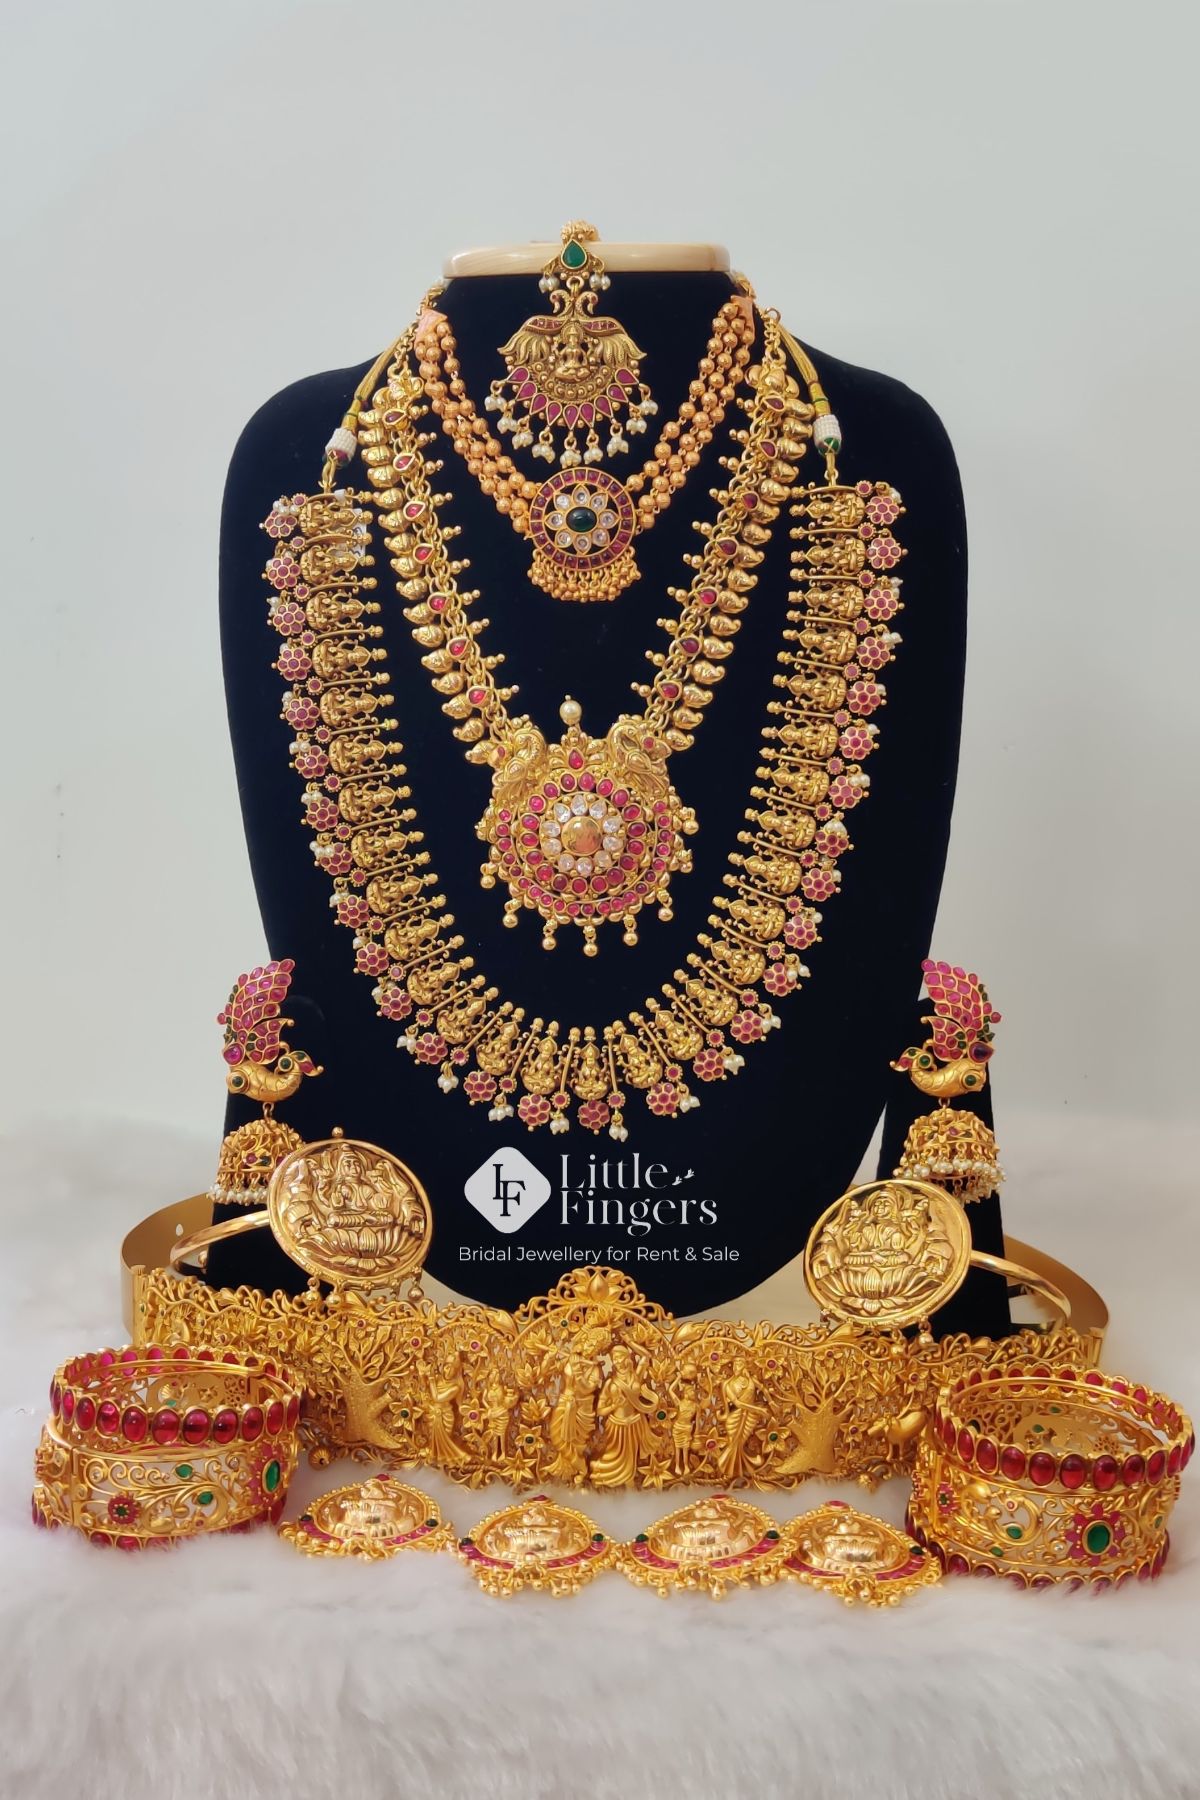 Wedding Muhurtham Bridal Jewellery for rent online - Little Fingers India